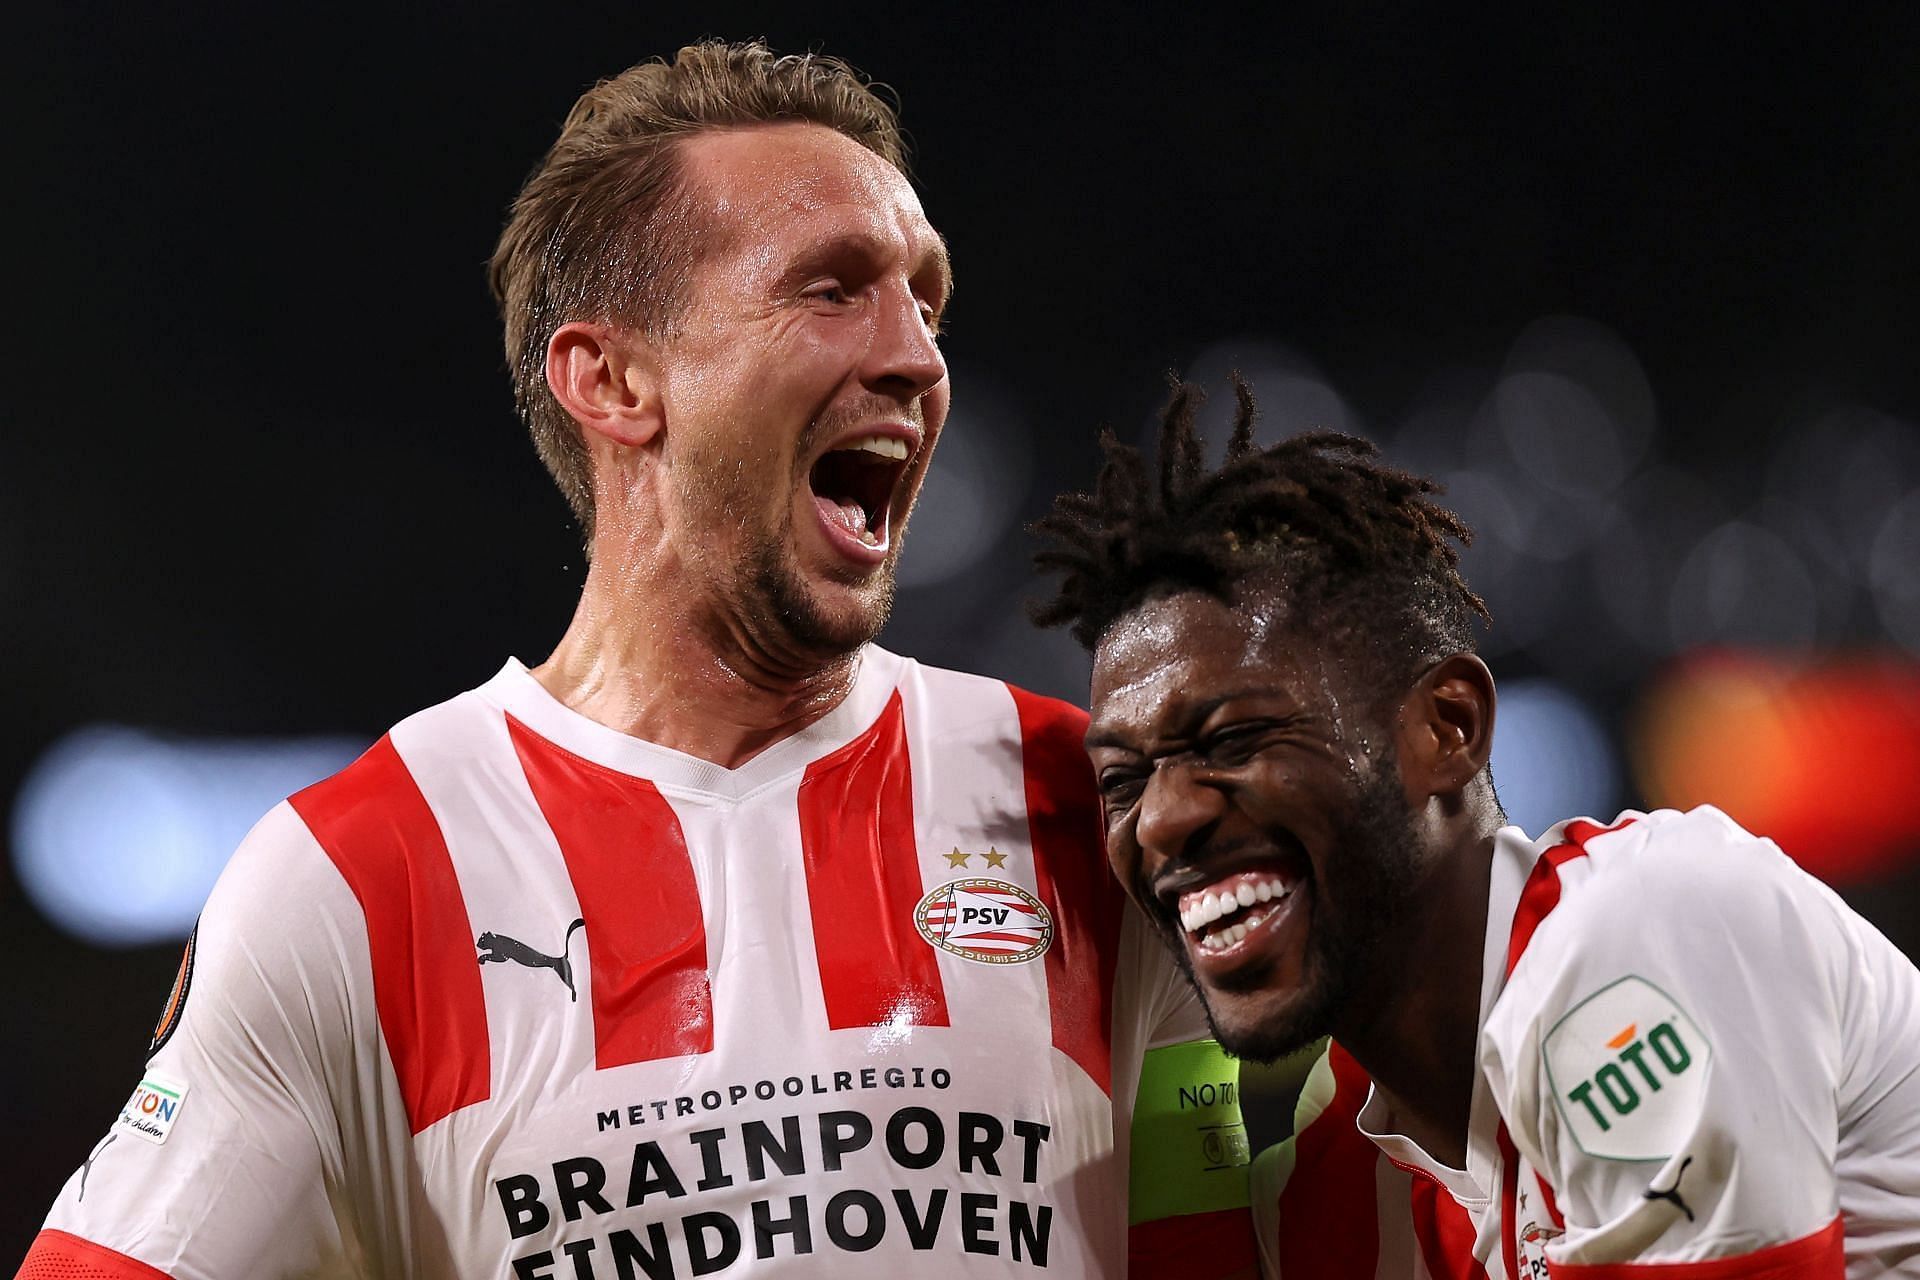 PSV have won their last 15 clashes with Volendam 